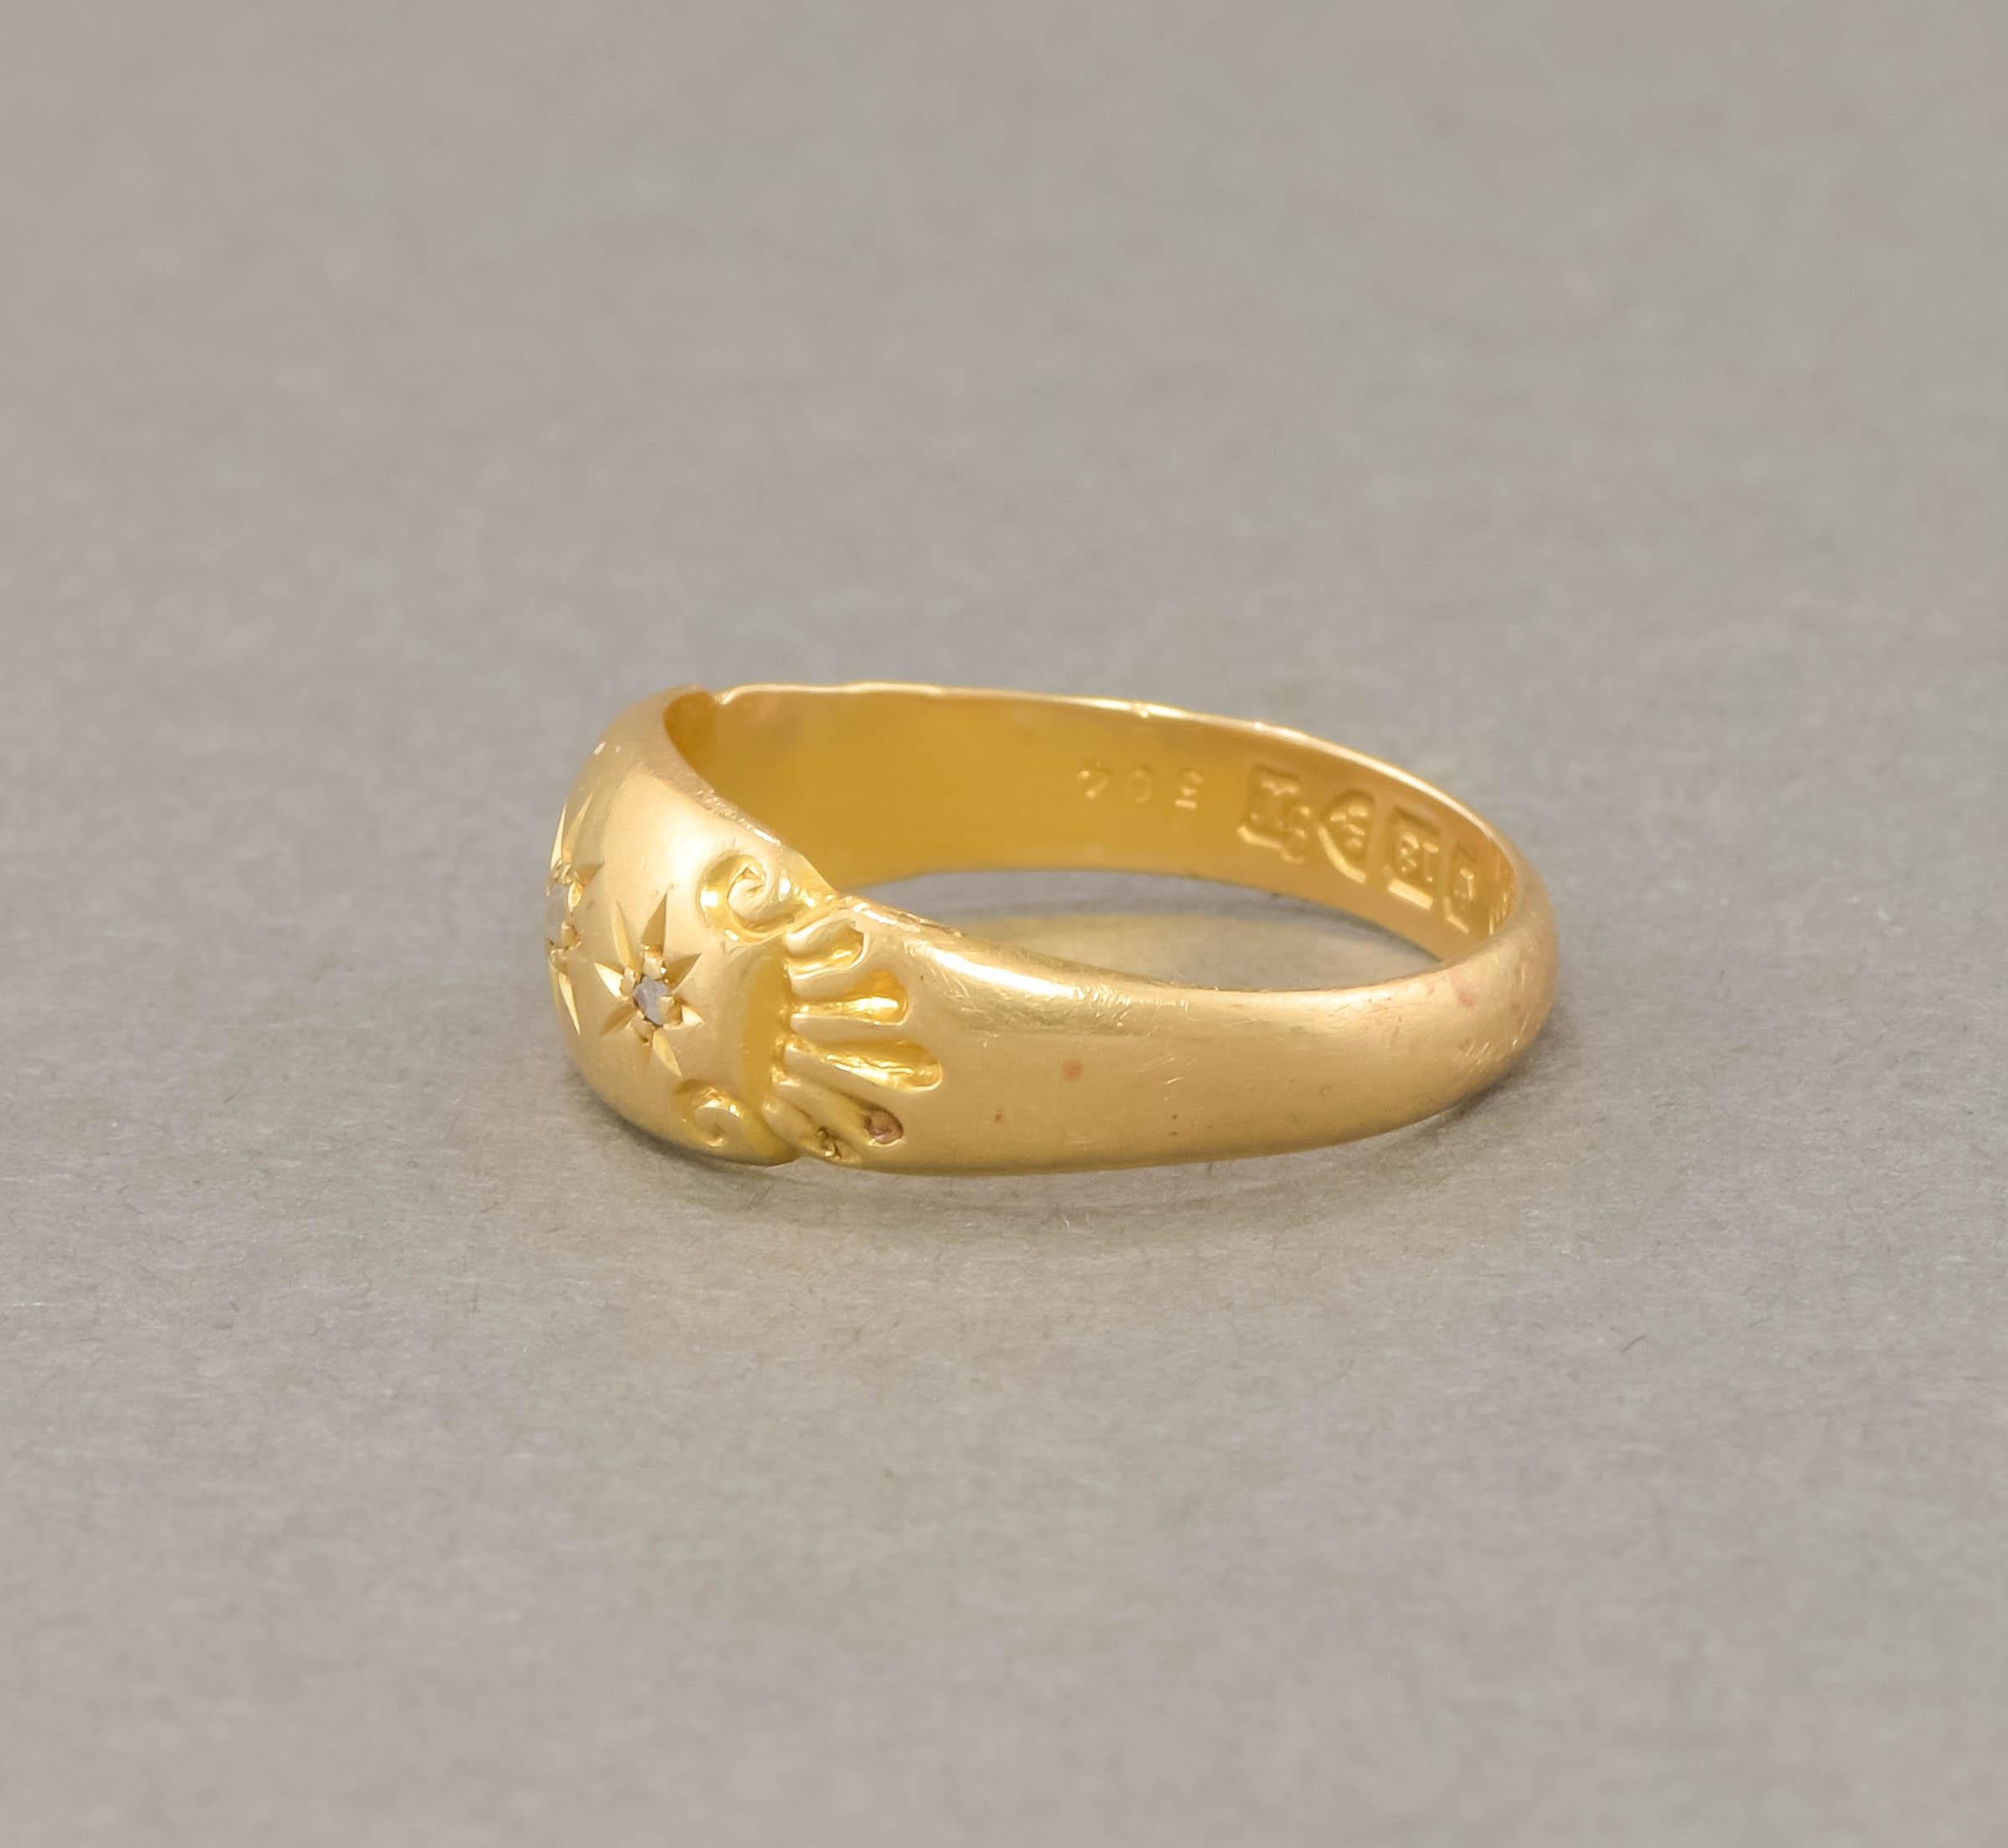 Edwardian 18K Gold Diamond Band Ring, Hallmarked Chester 1910 - 1911 3